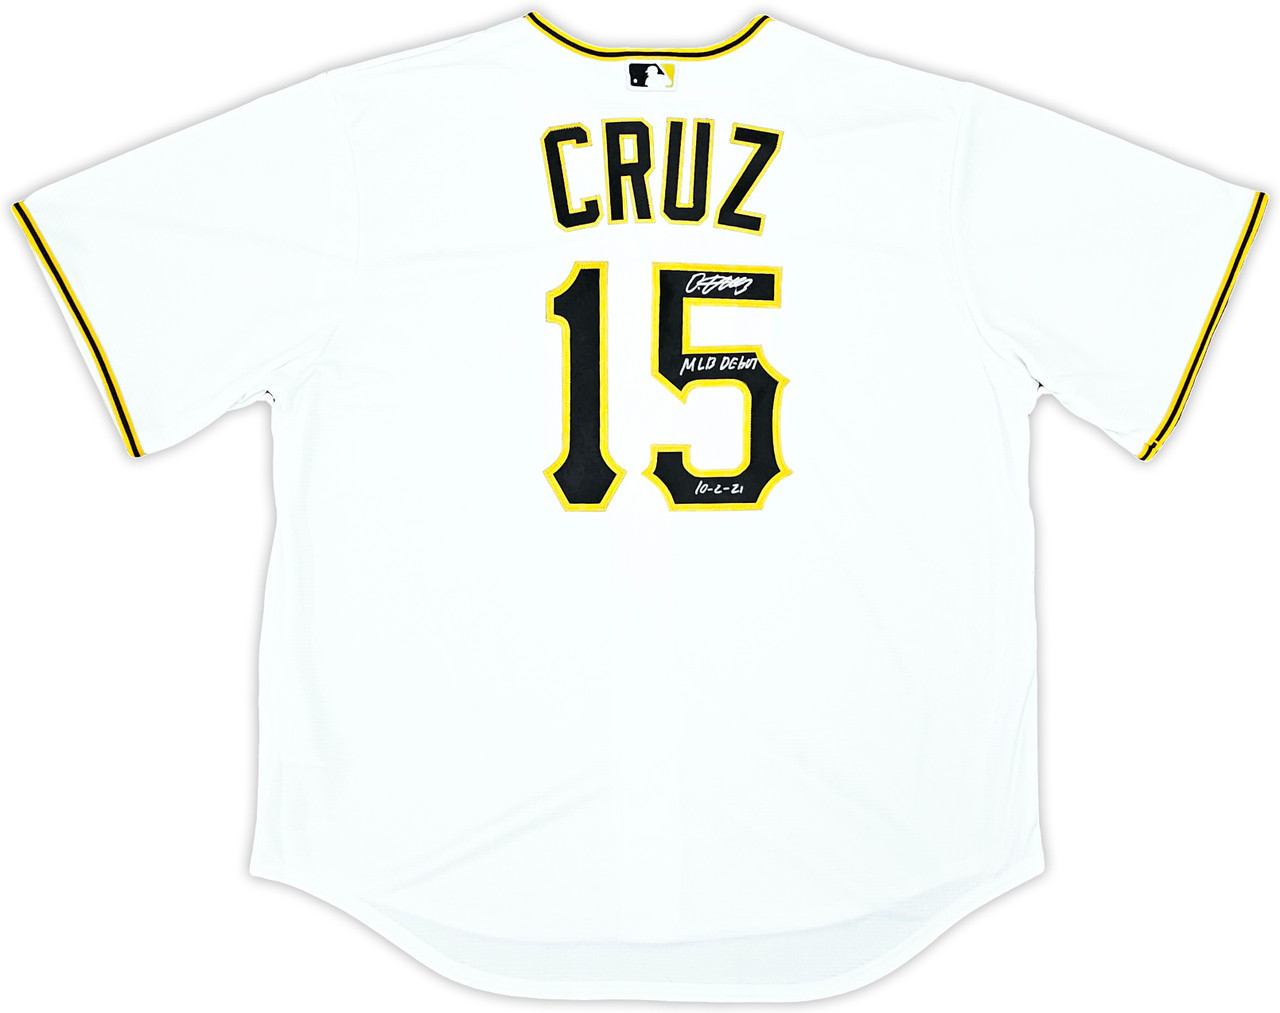 Pittsburgh Pirates Oneil Cruz Autographed White Nike Jersey Size